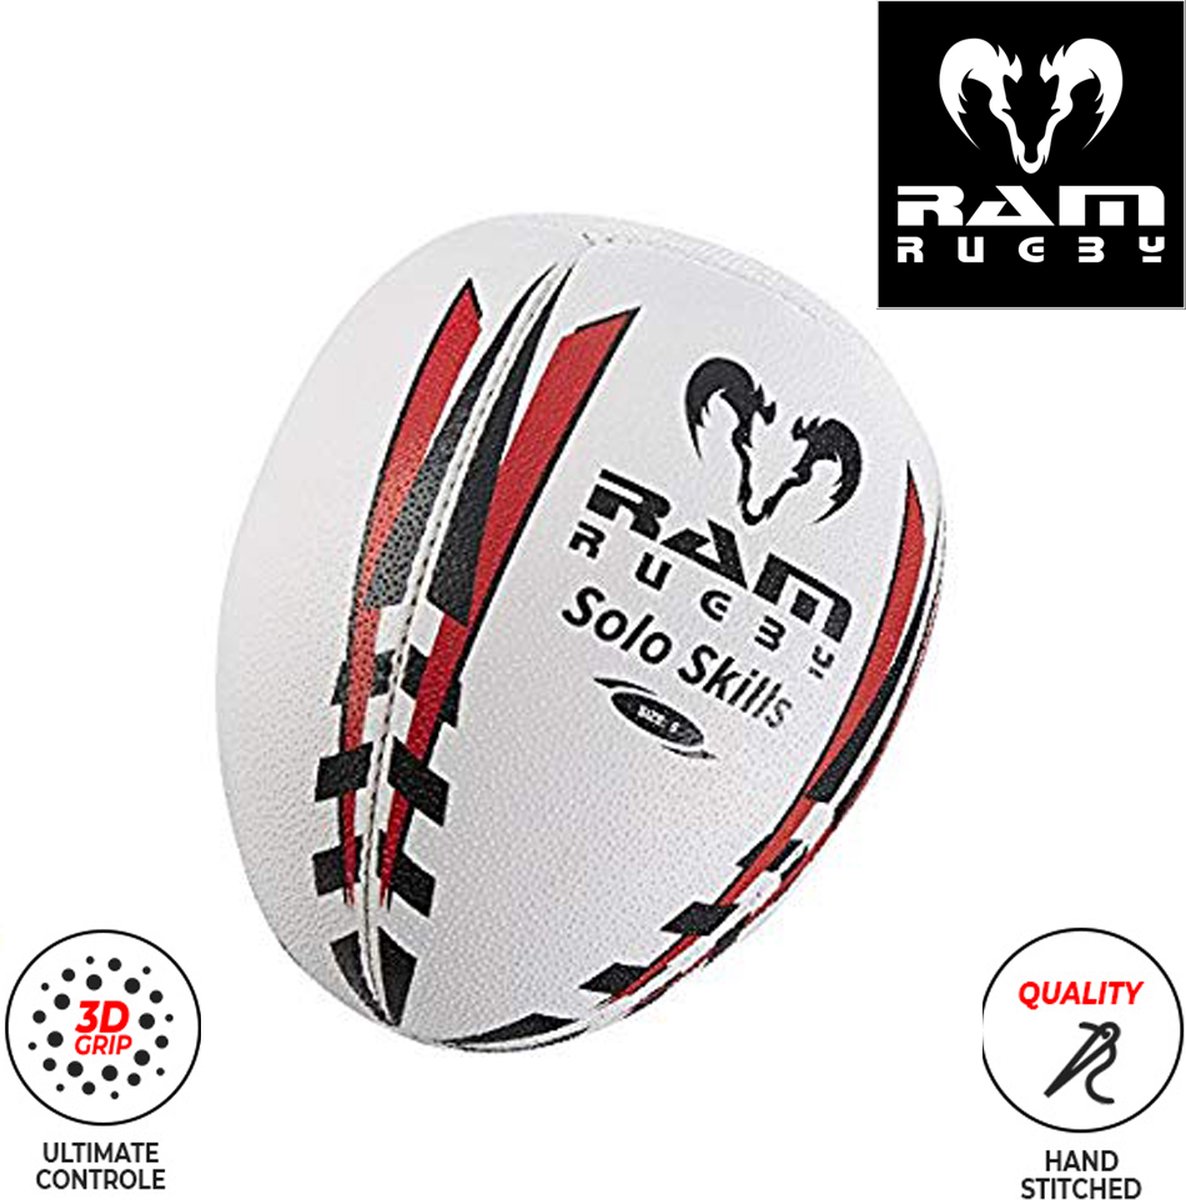 Solo Skill Rugby Ball - Ultieme individuele training - 3D Grip - Oefen Kaatsen en Vangen individueel Size 4 RAM® Engeland - Uniek 3d Grip techn. Prof.